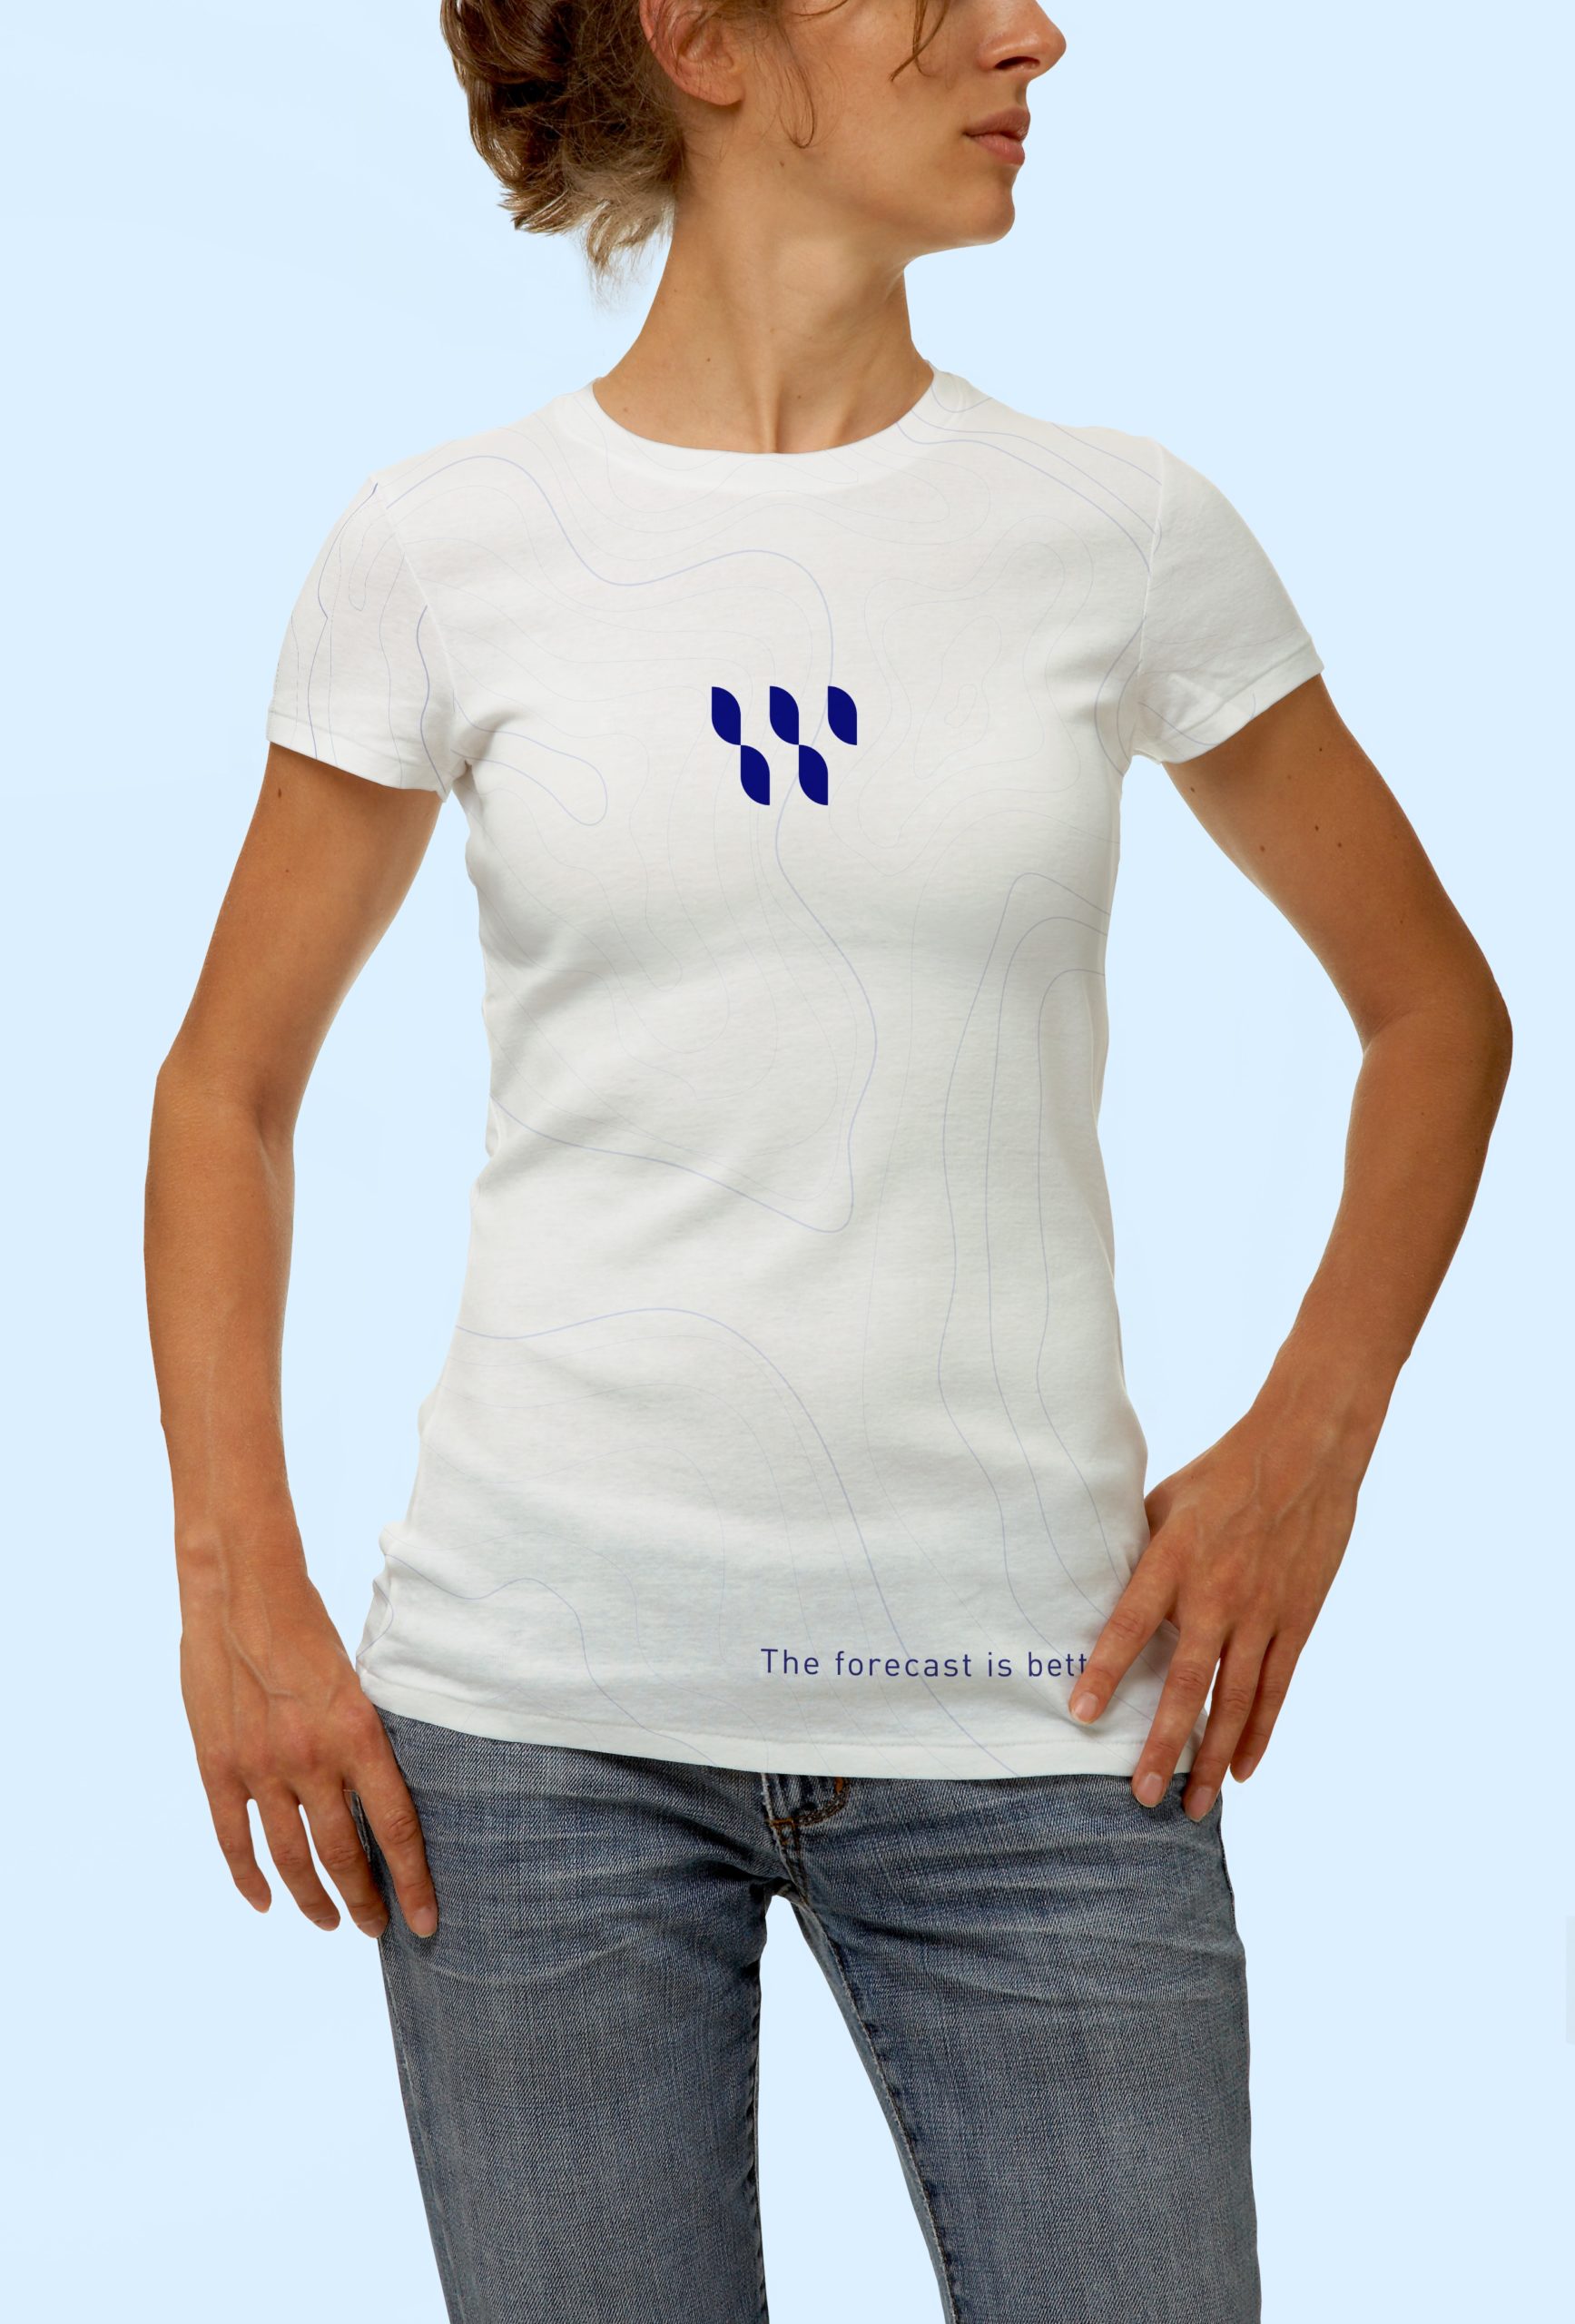 WEARECAPRI portfolio weather lab: Shirt